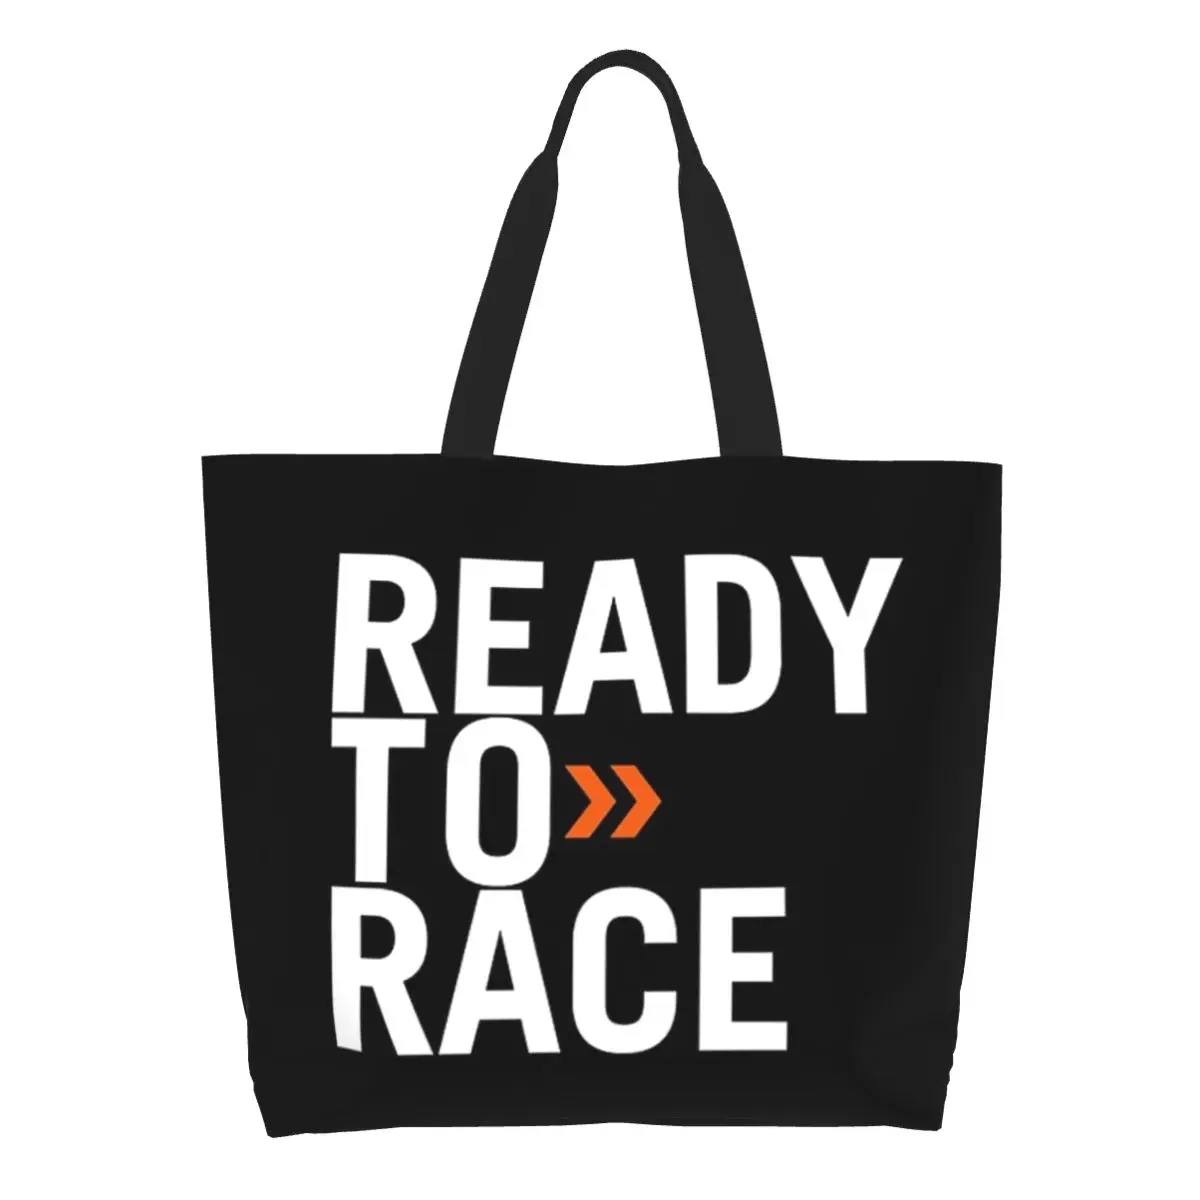 

Ready To Race Groceries Shopping Bag Printing Canvas Shopper Tote Shoulder Bag Large Capacity Washable Racing Sport Handbag